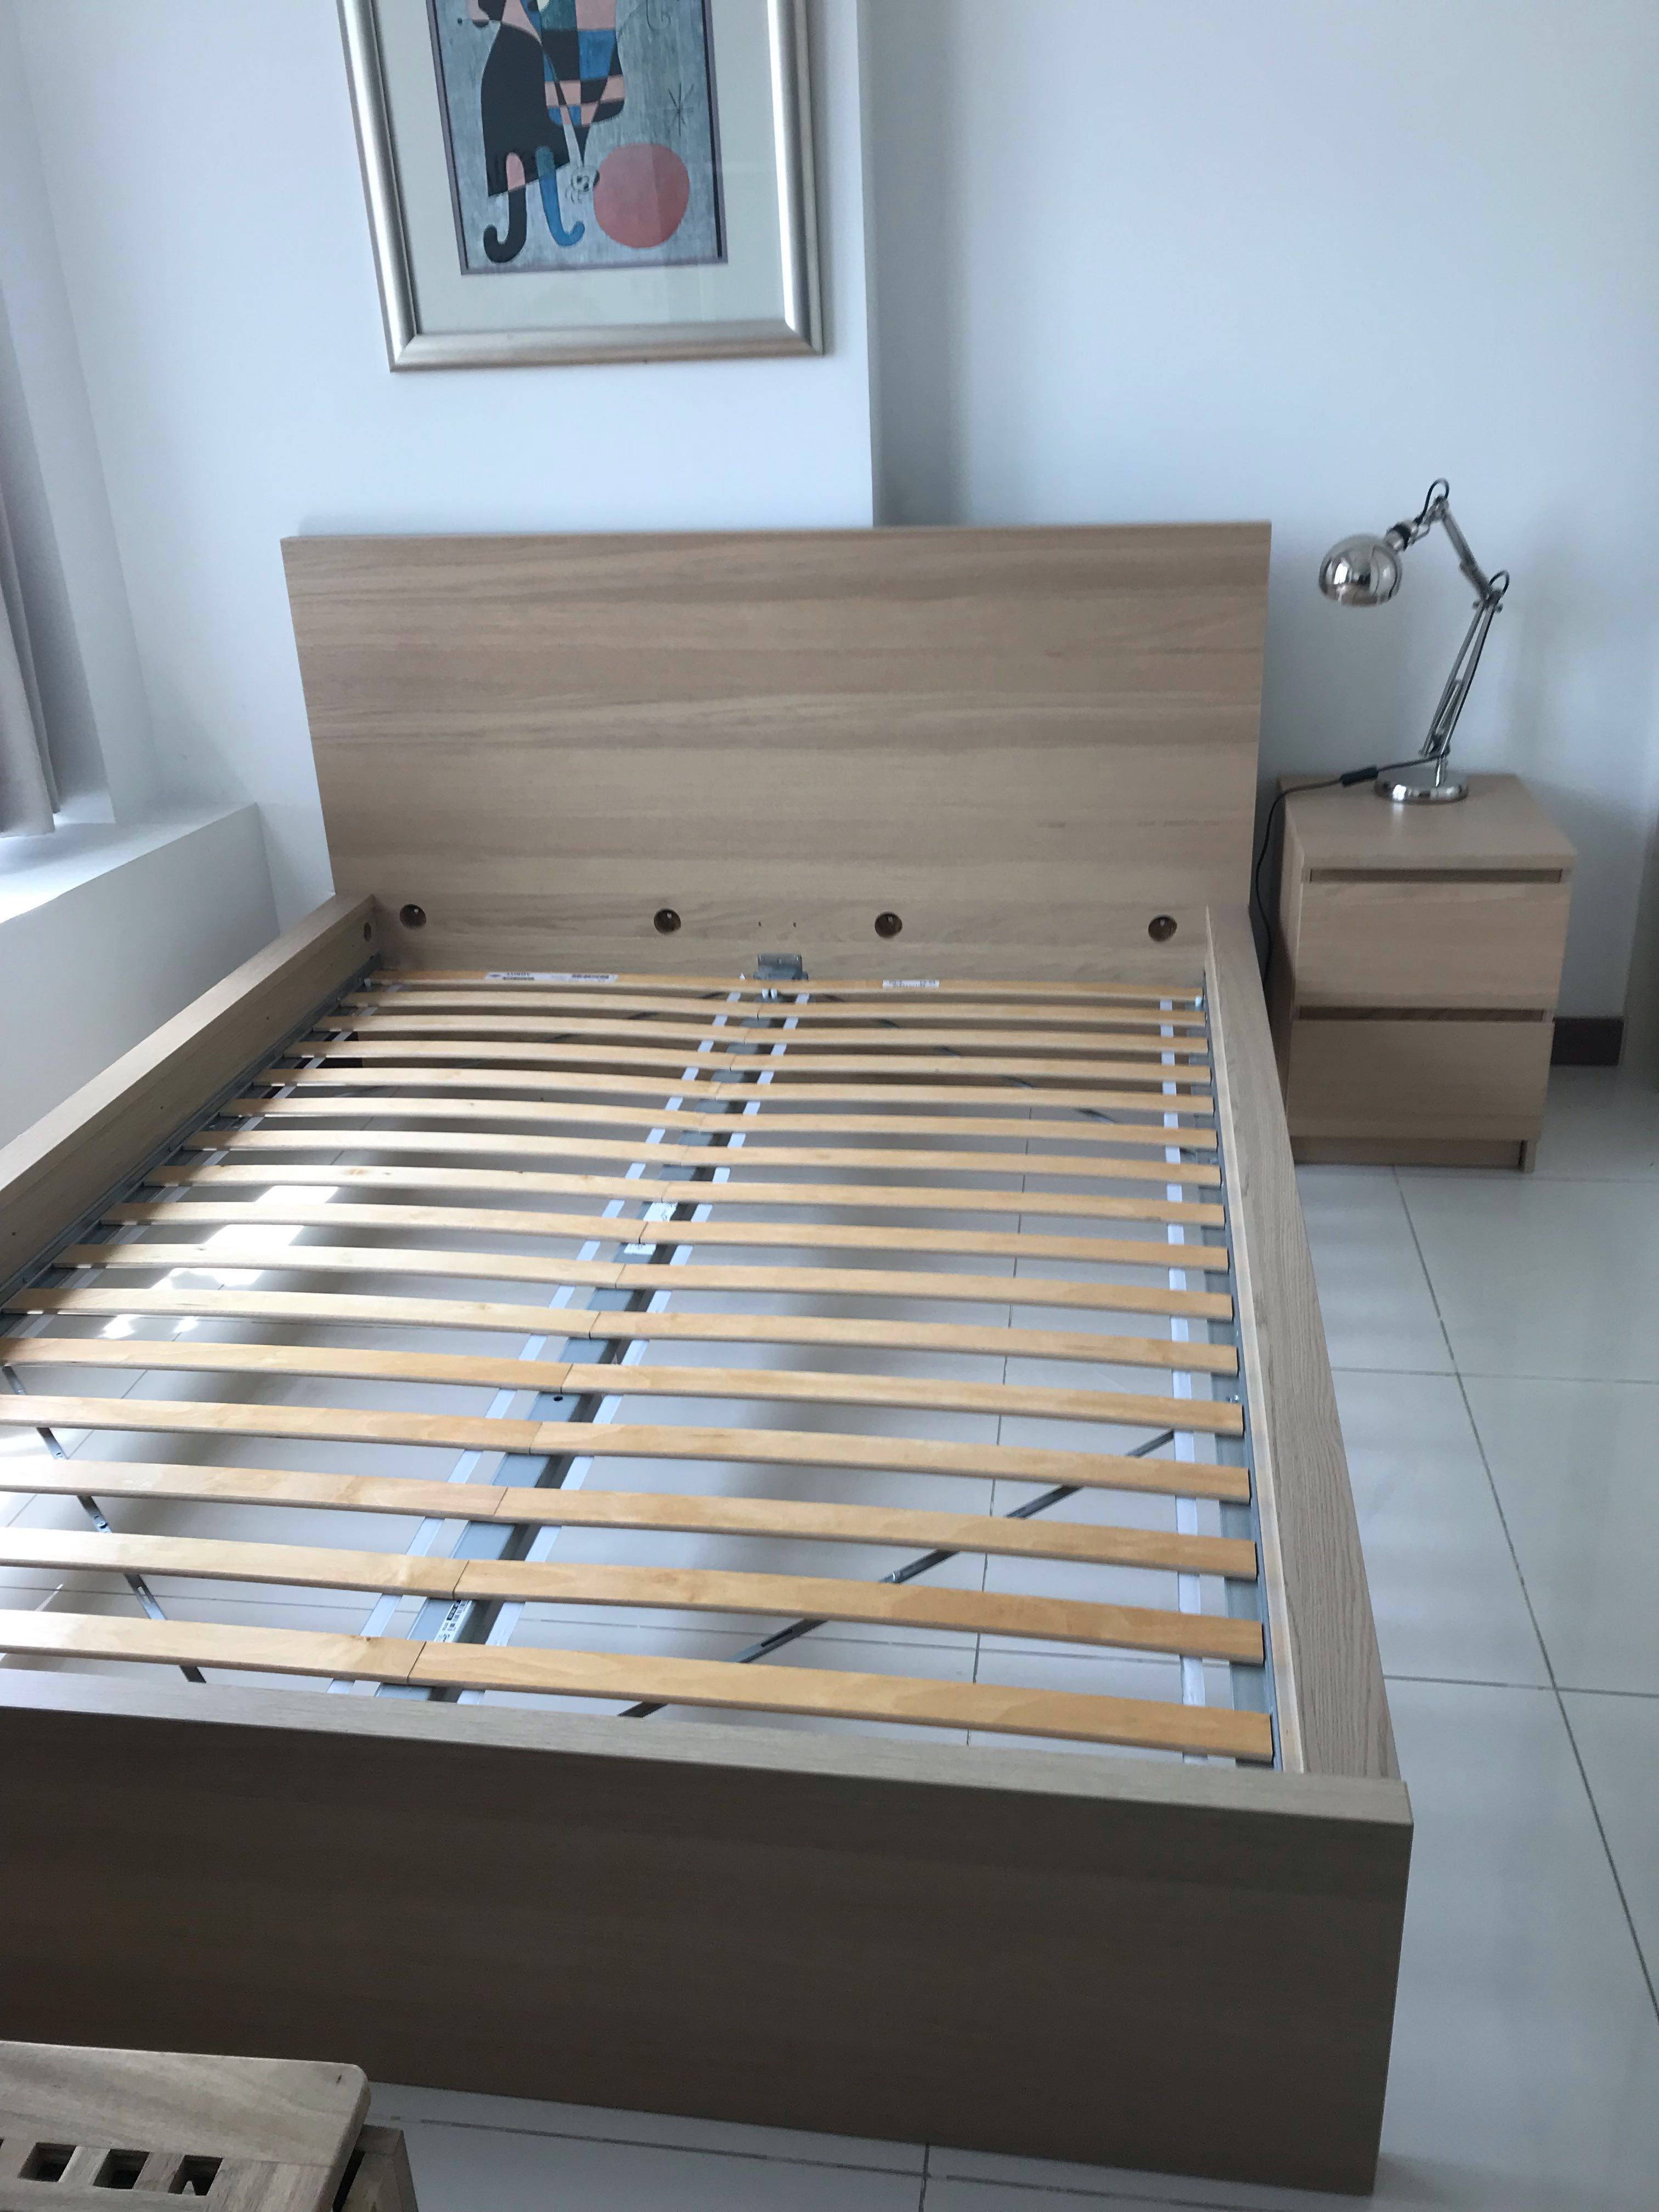 Ikea Bed Frame With Slat Furniture, Does Ikea Malm Bed Need Slats